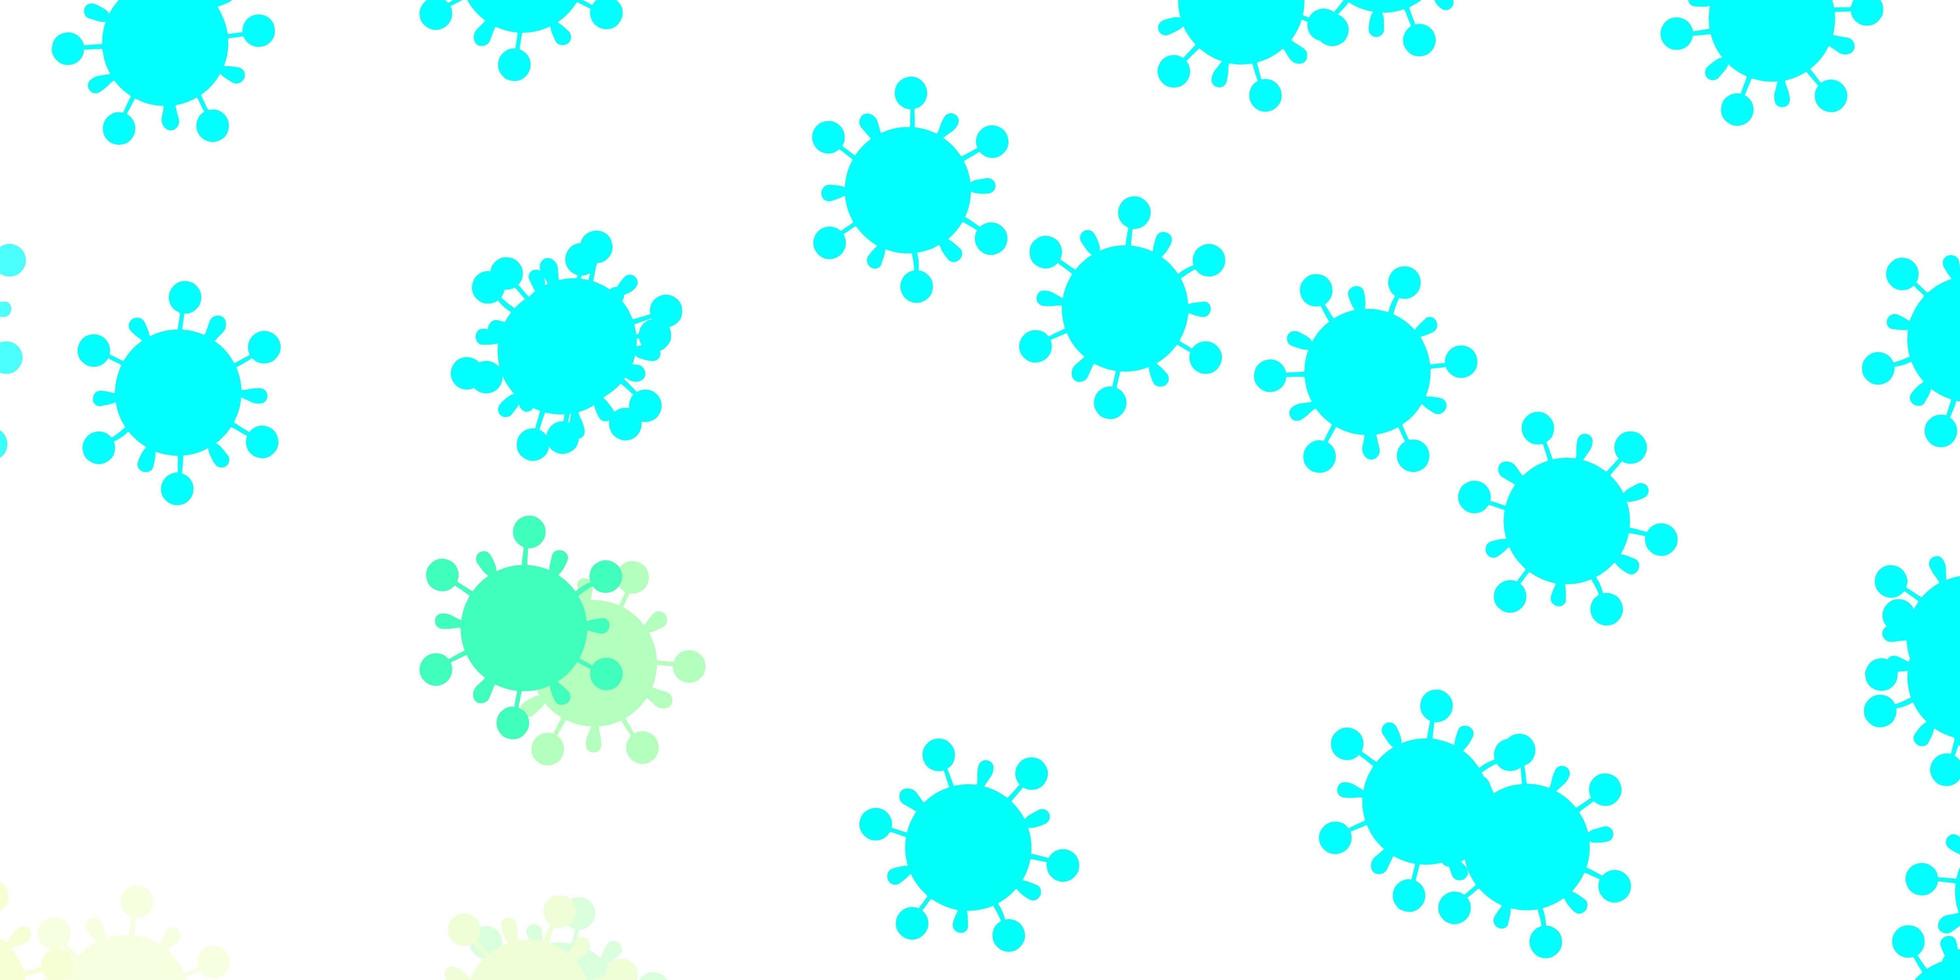 lichtblauwgroene vectorachtergrond met virussymbolen vector